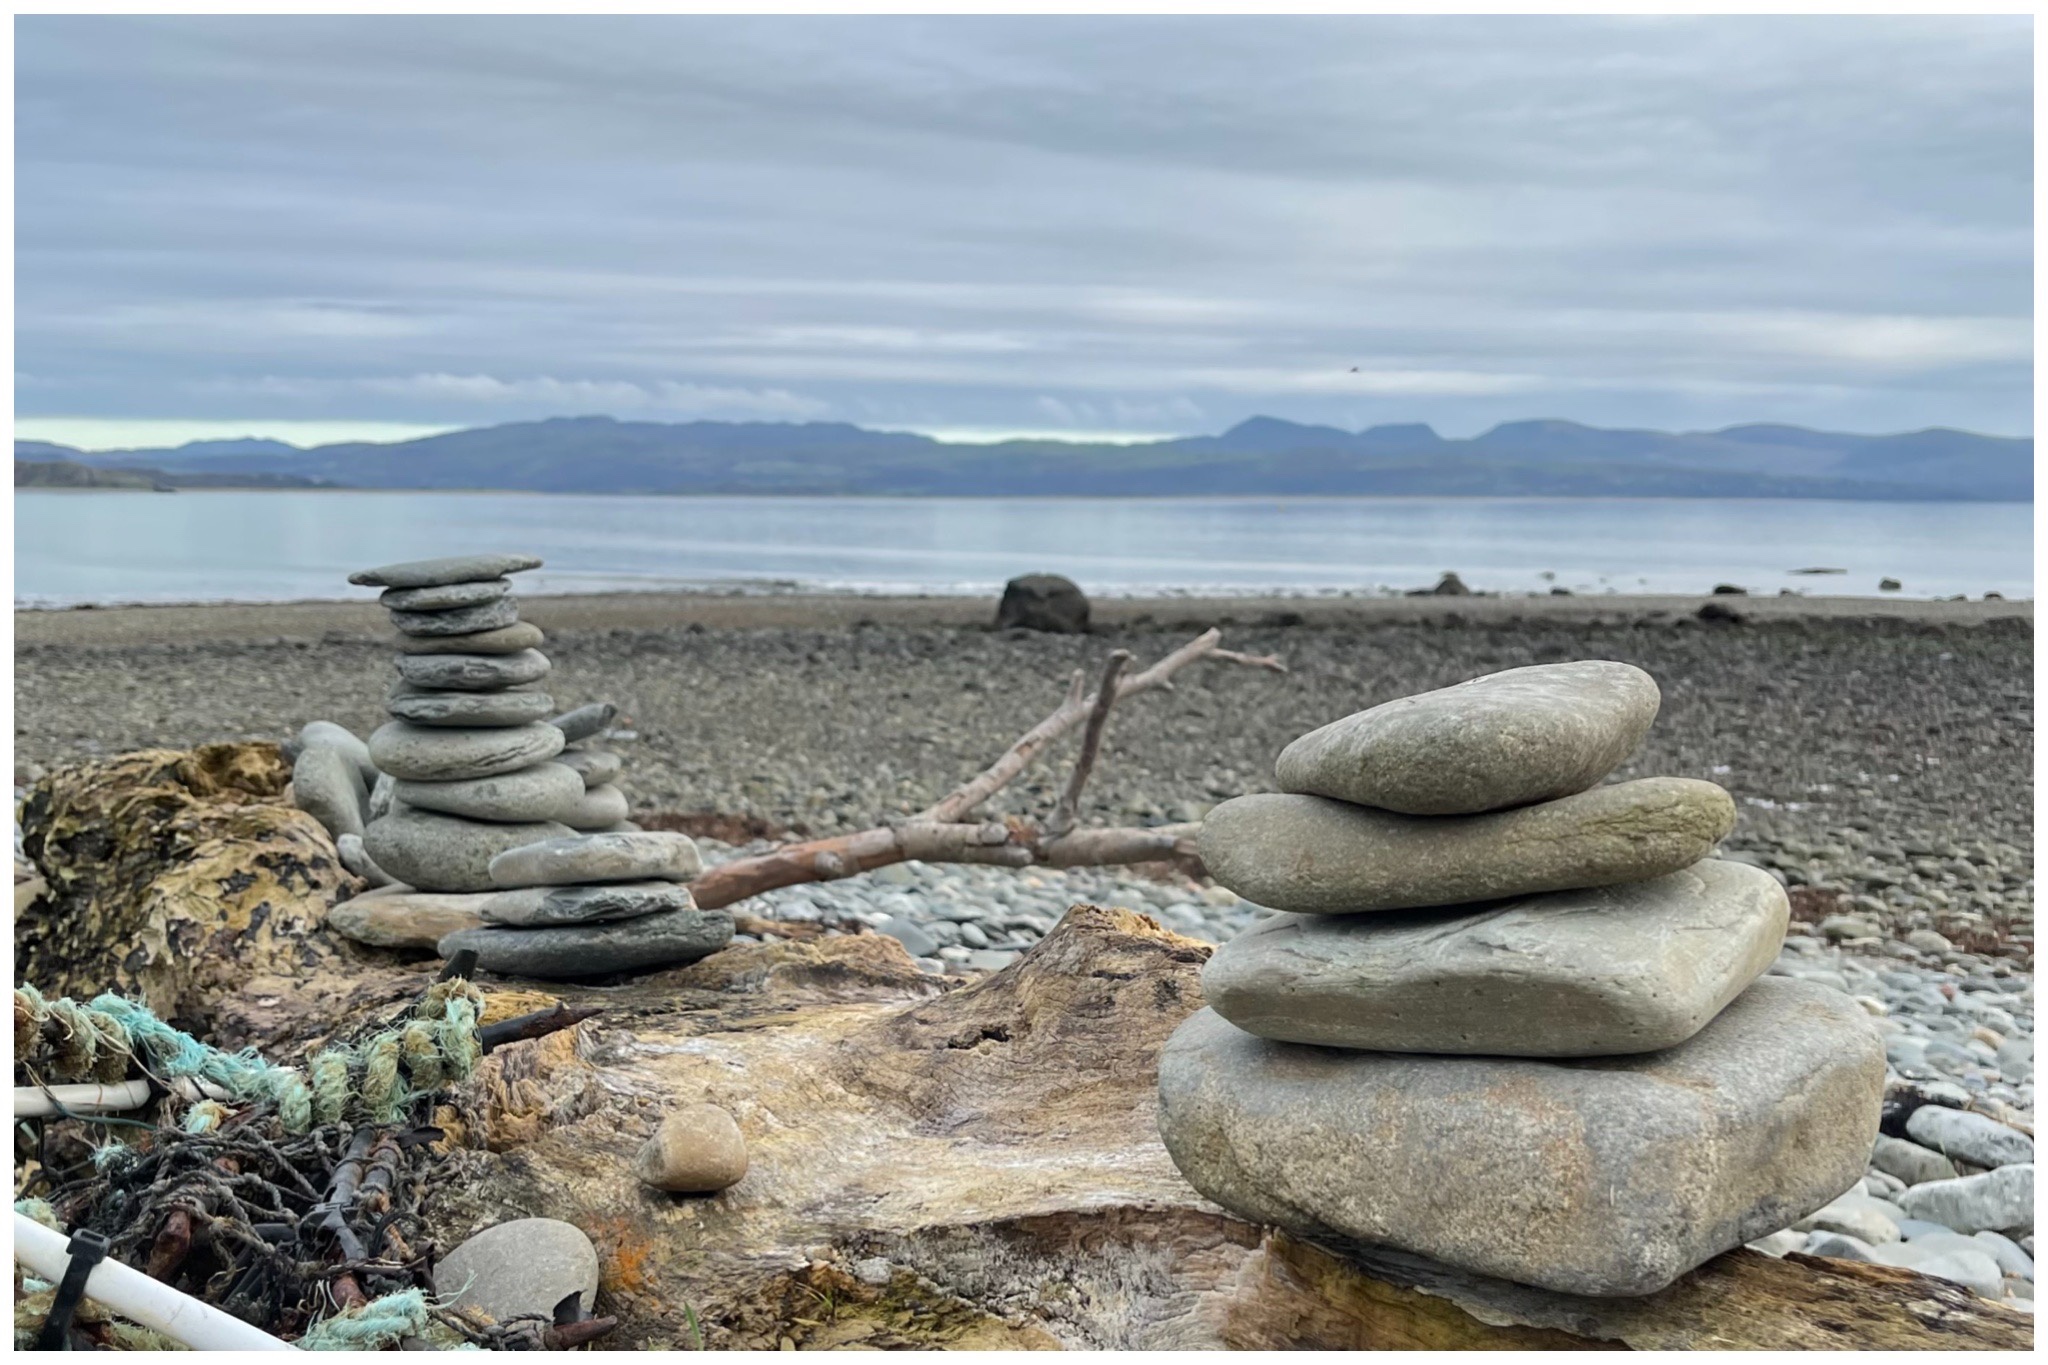 Stone piles on the beach